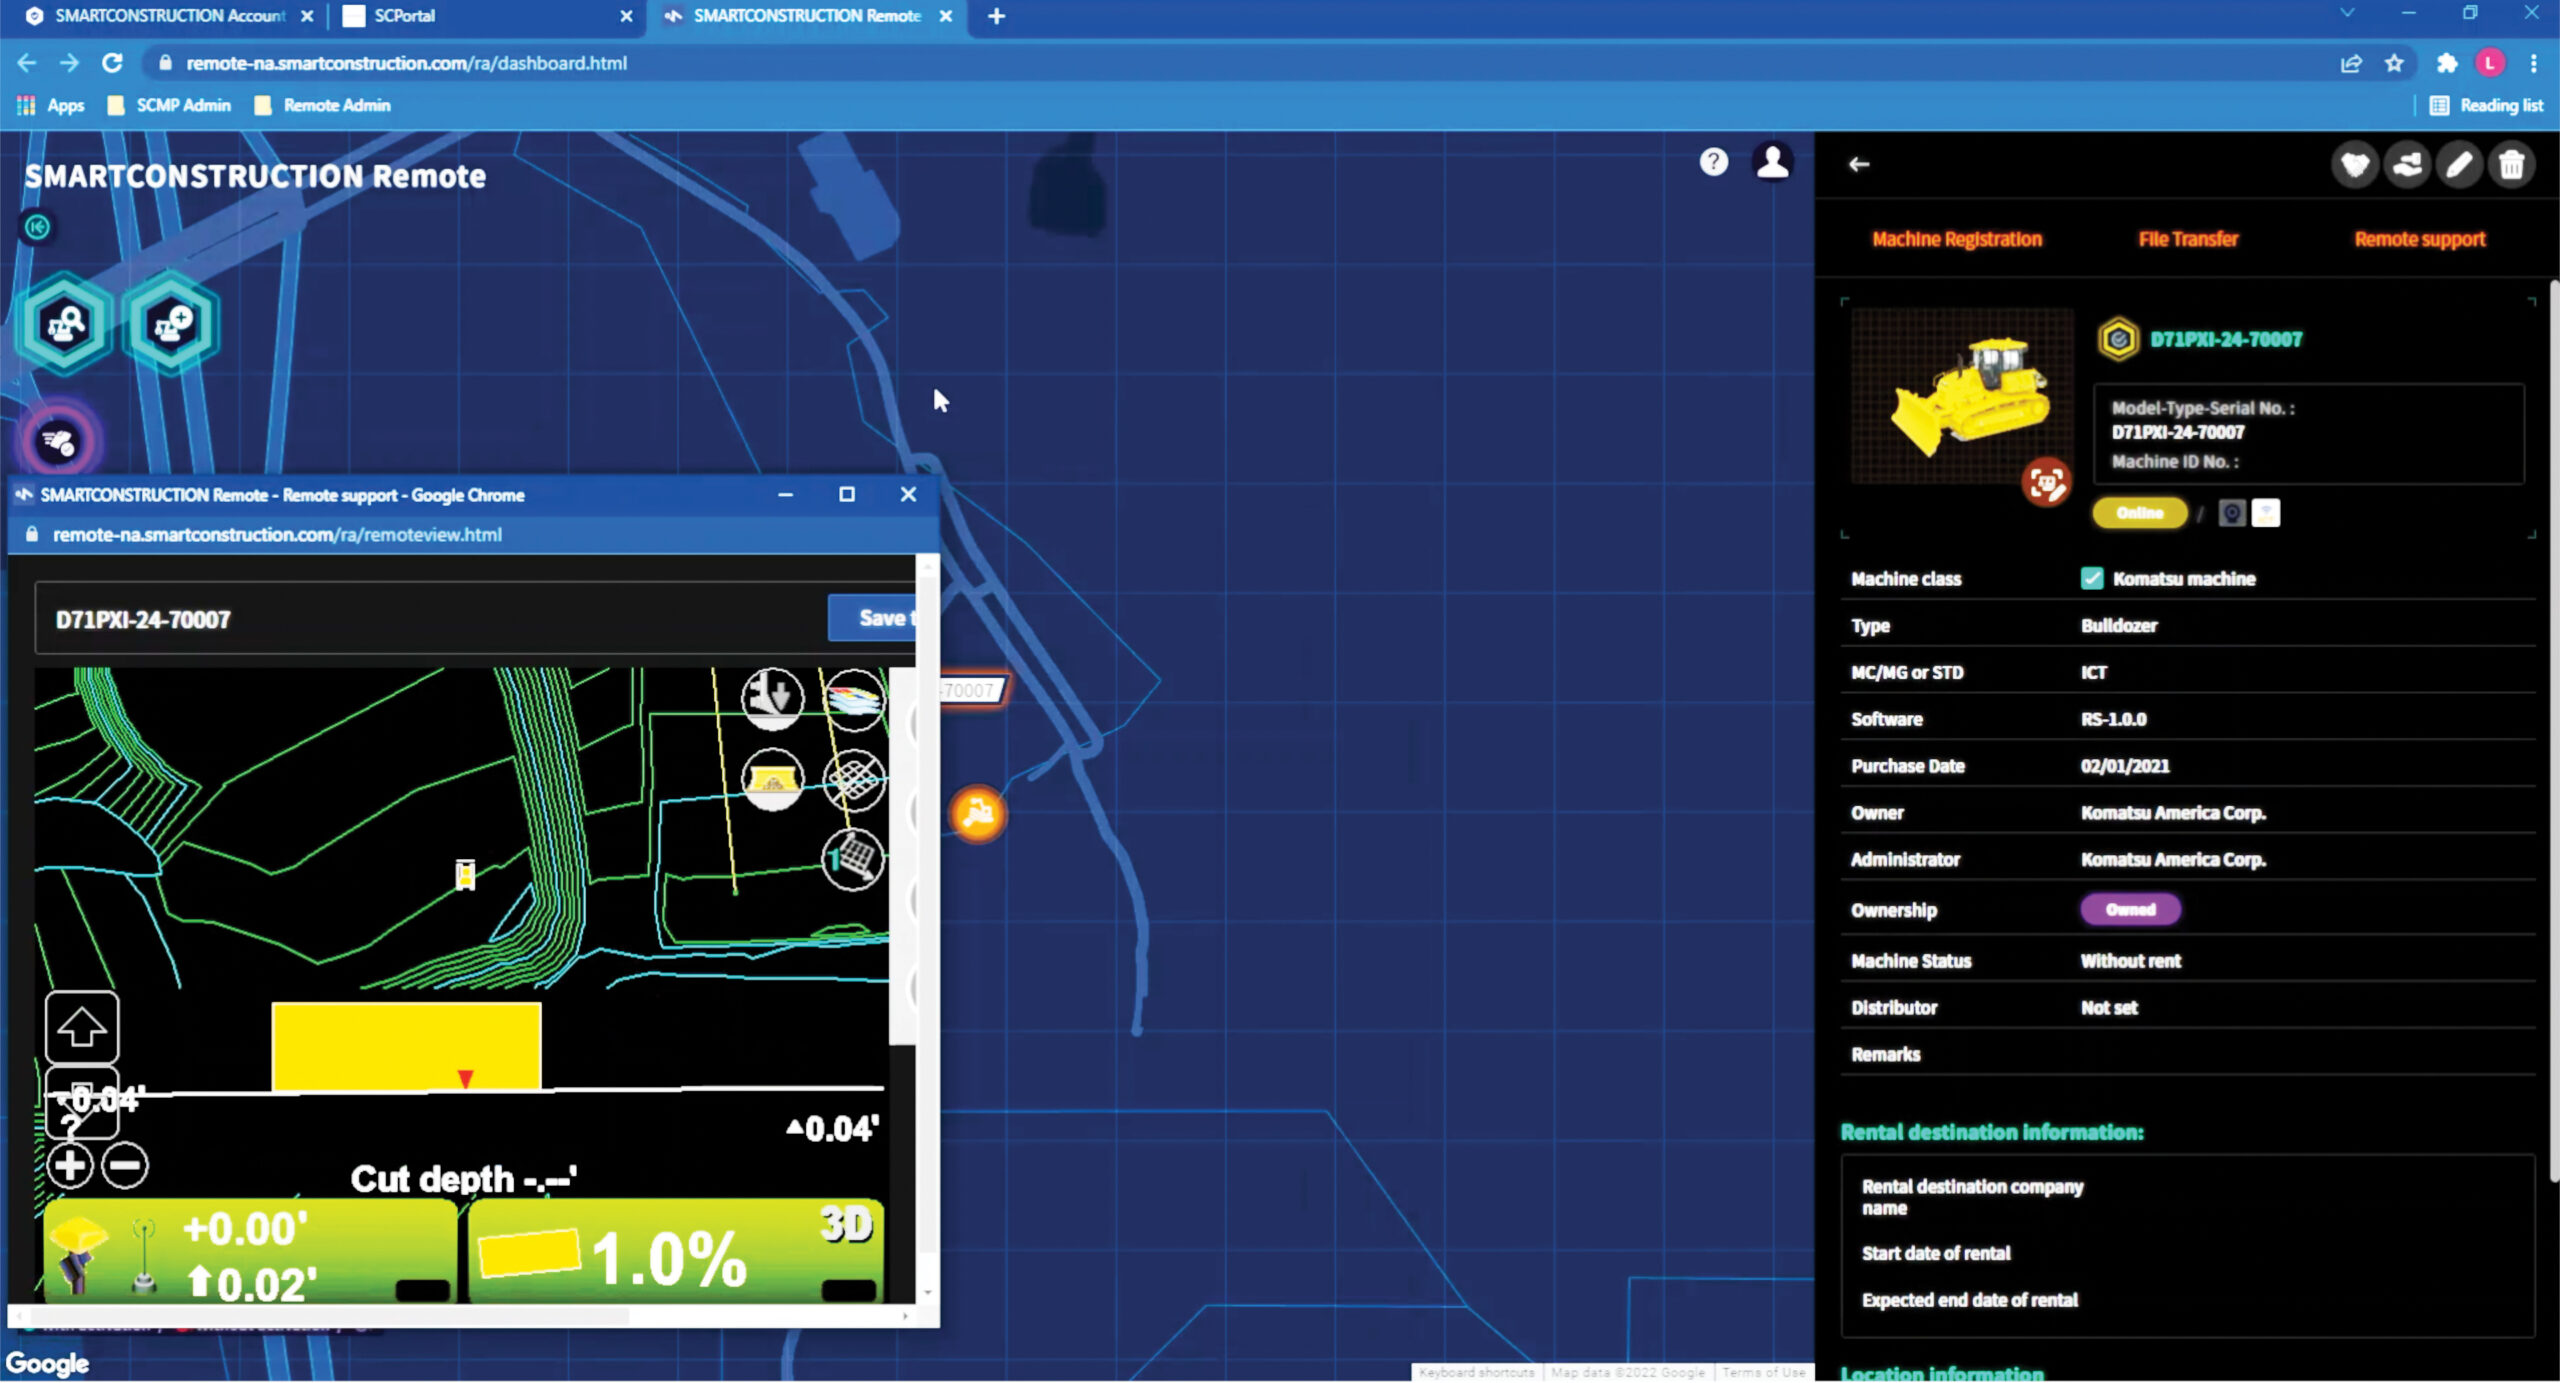 A desktop screenshot of the Smart Construction Remote interface showing a Komatsu Dozer